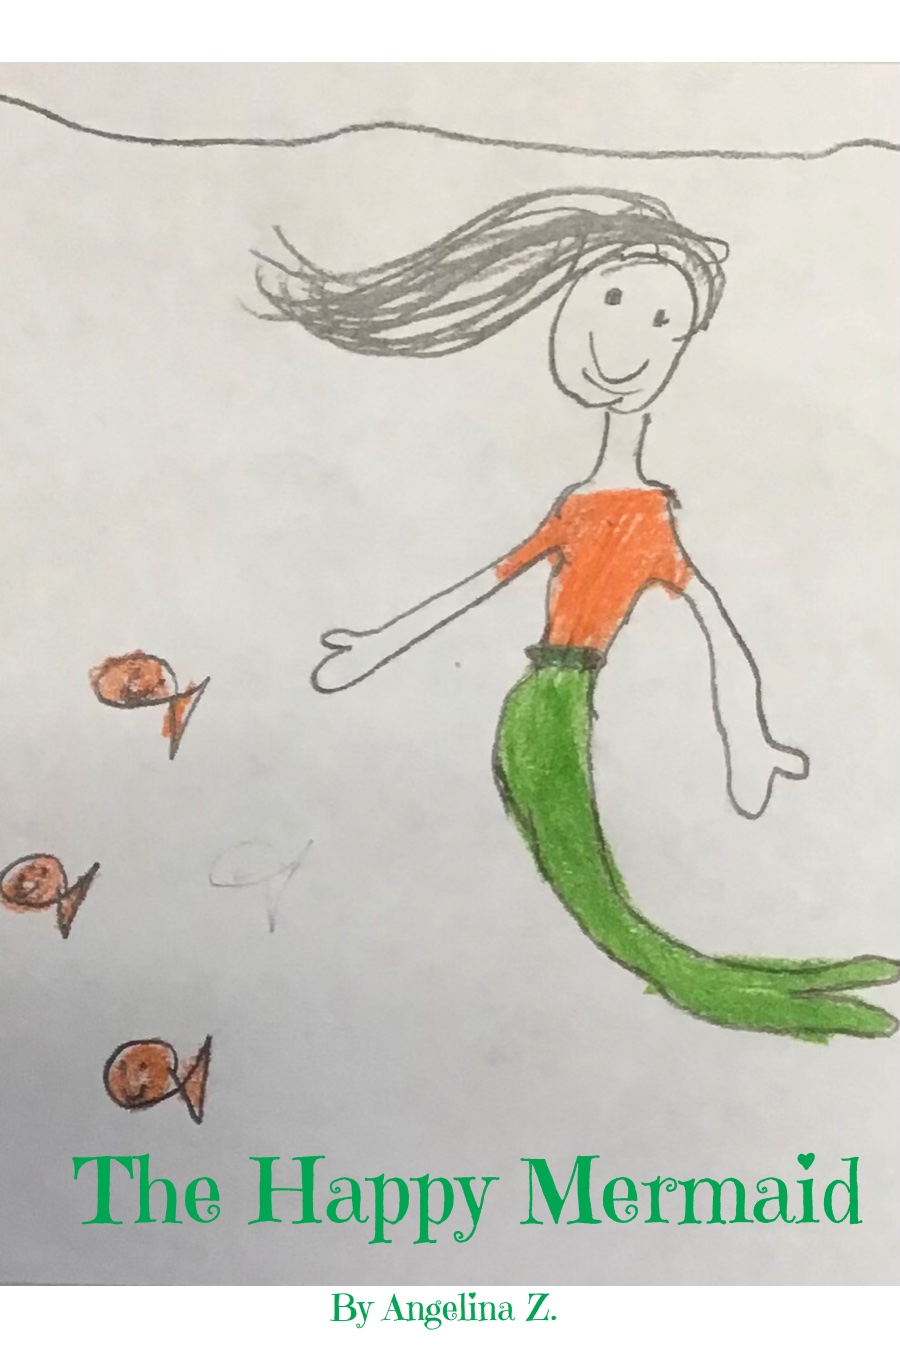 The Happy Mermaid by Angelina Z